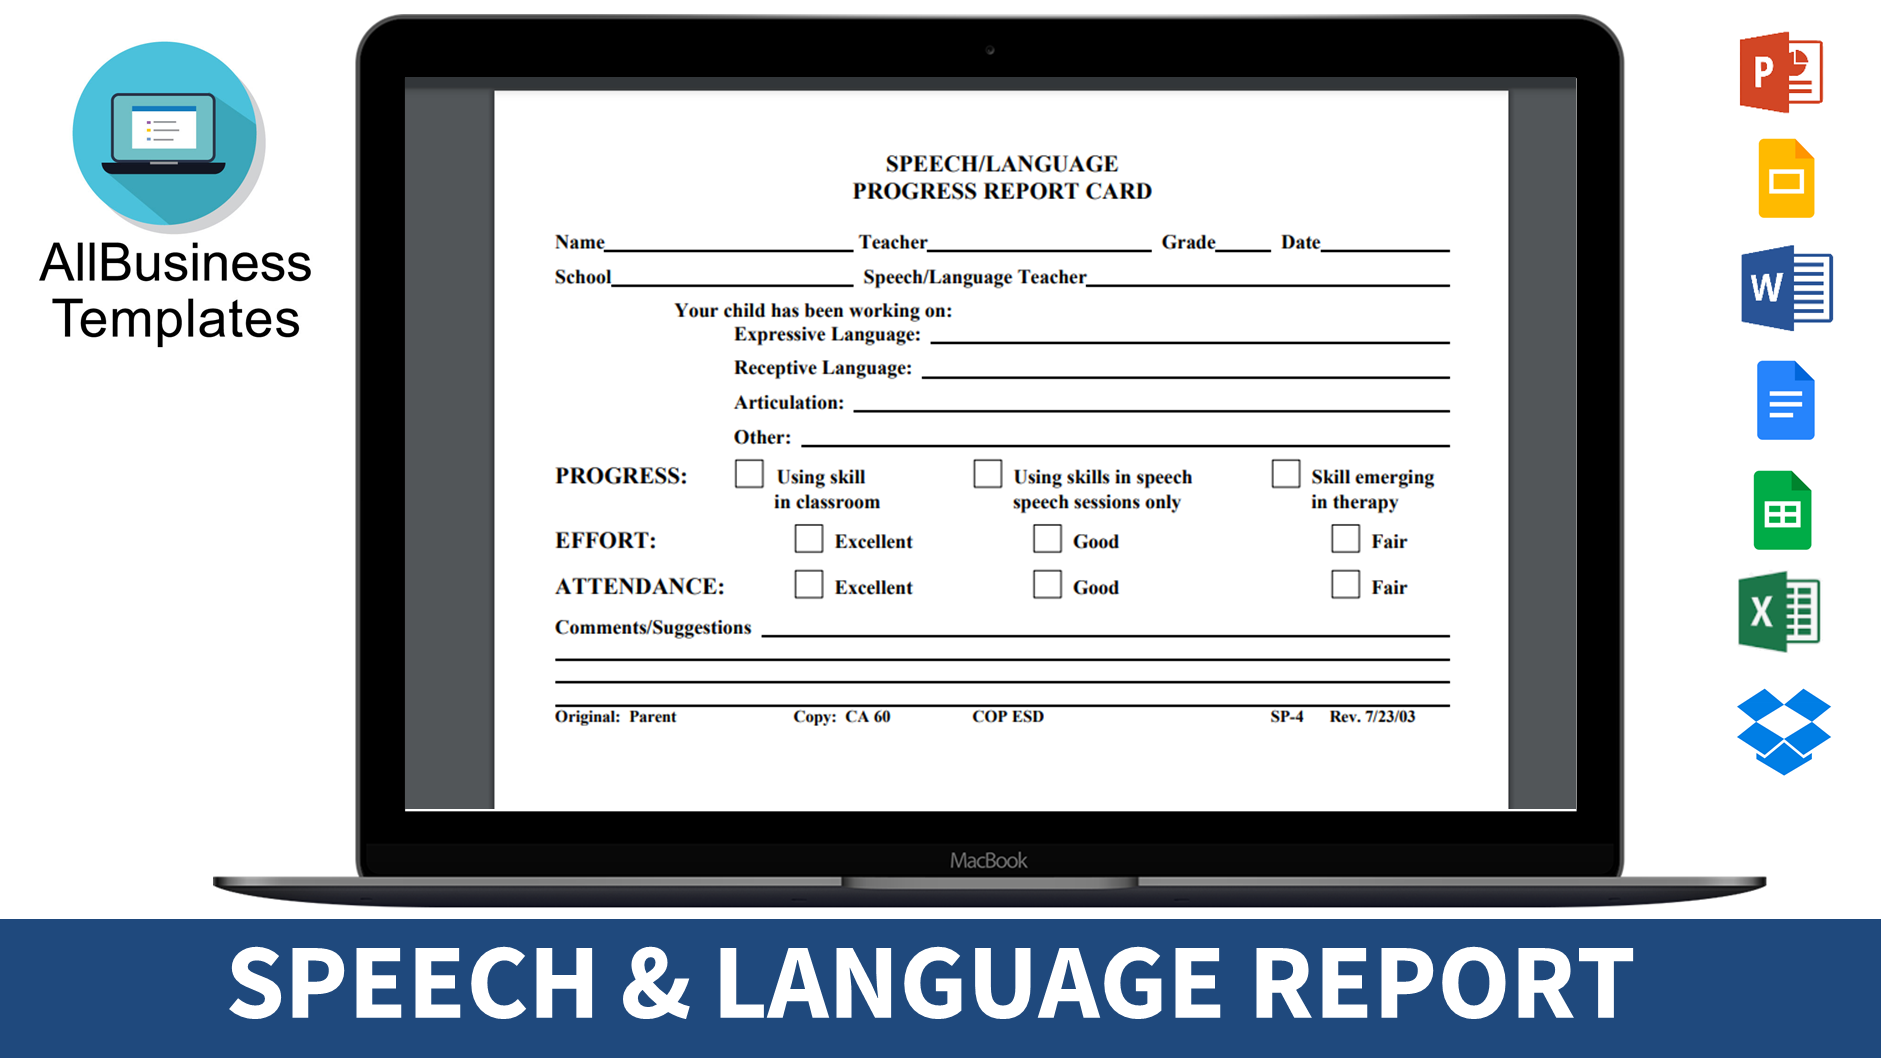 speech & language progress report card plantilla imagen principal